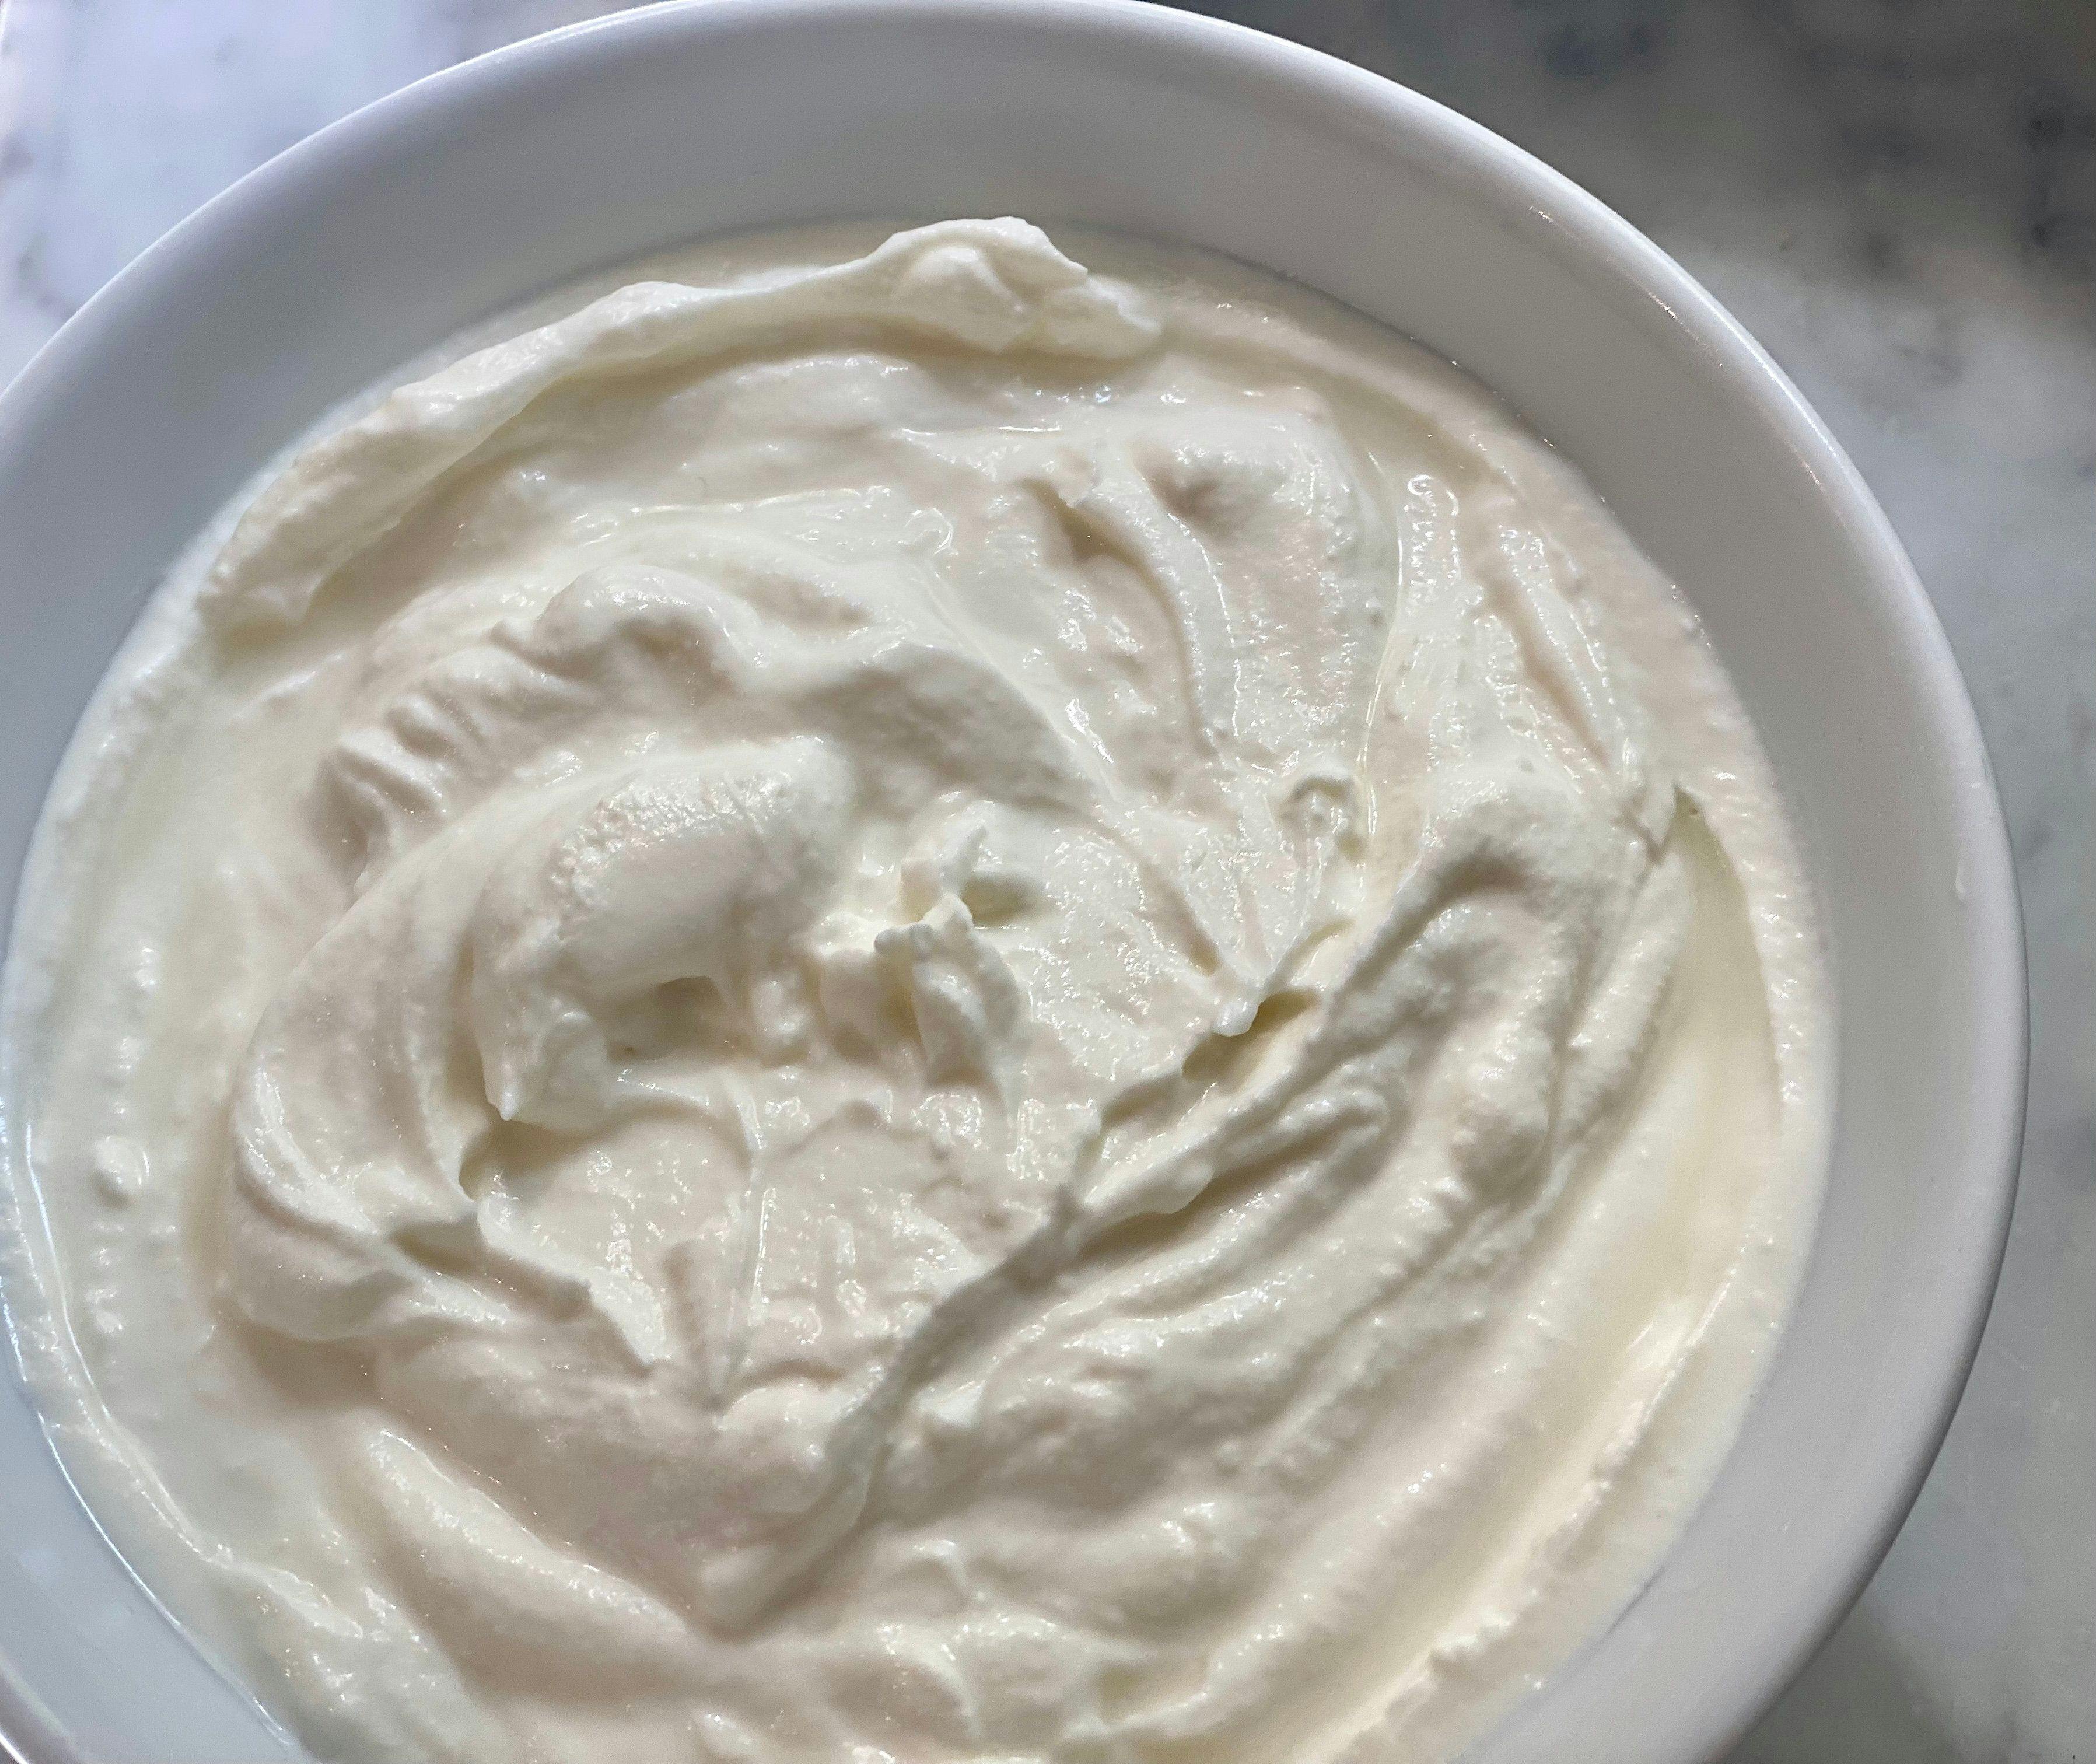 a creamy yogurt